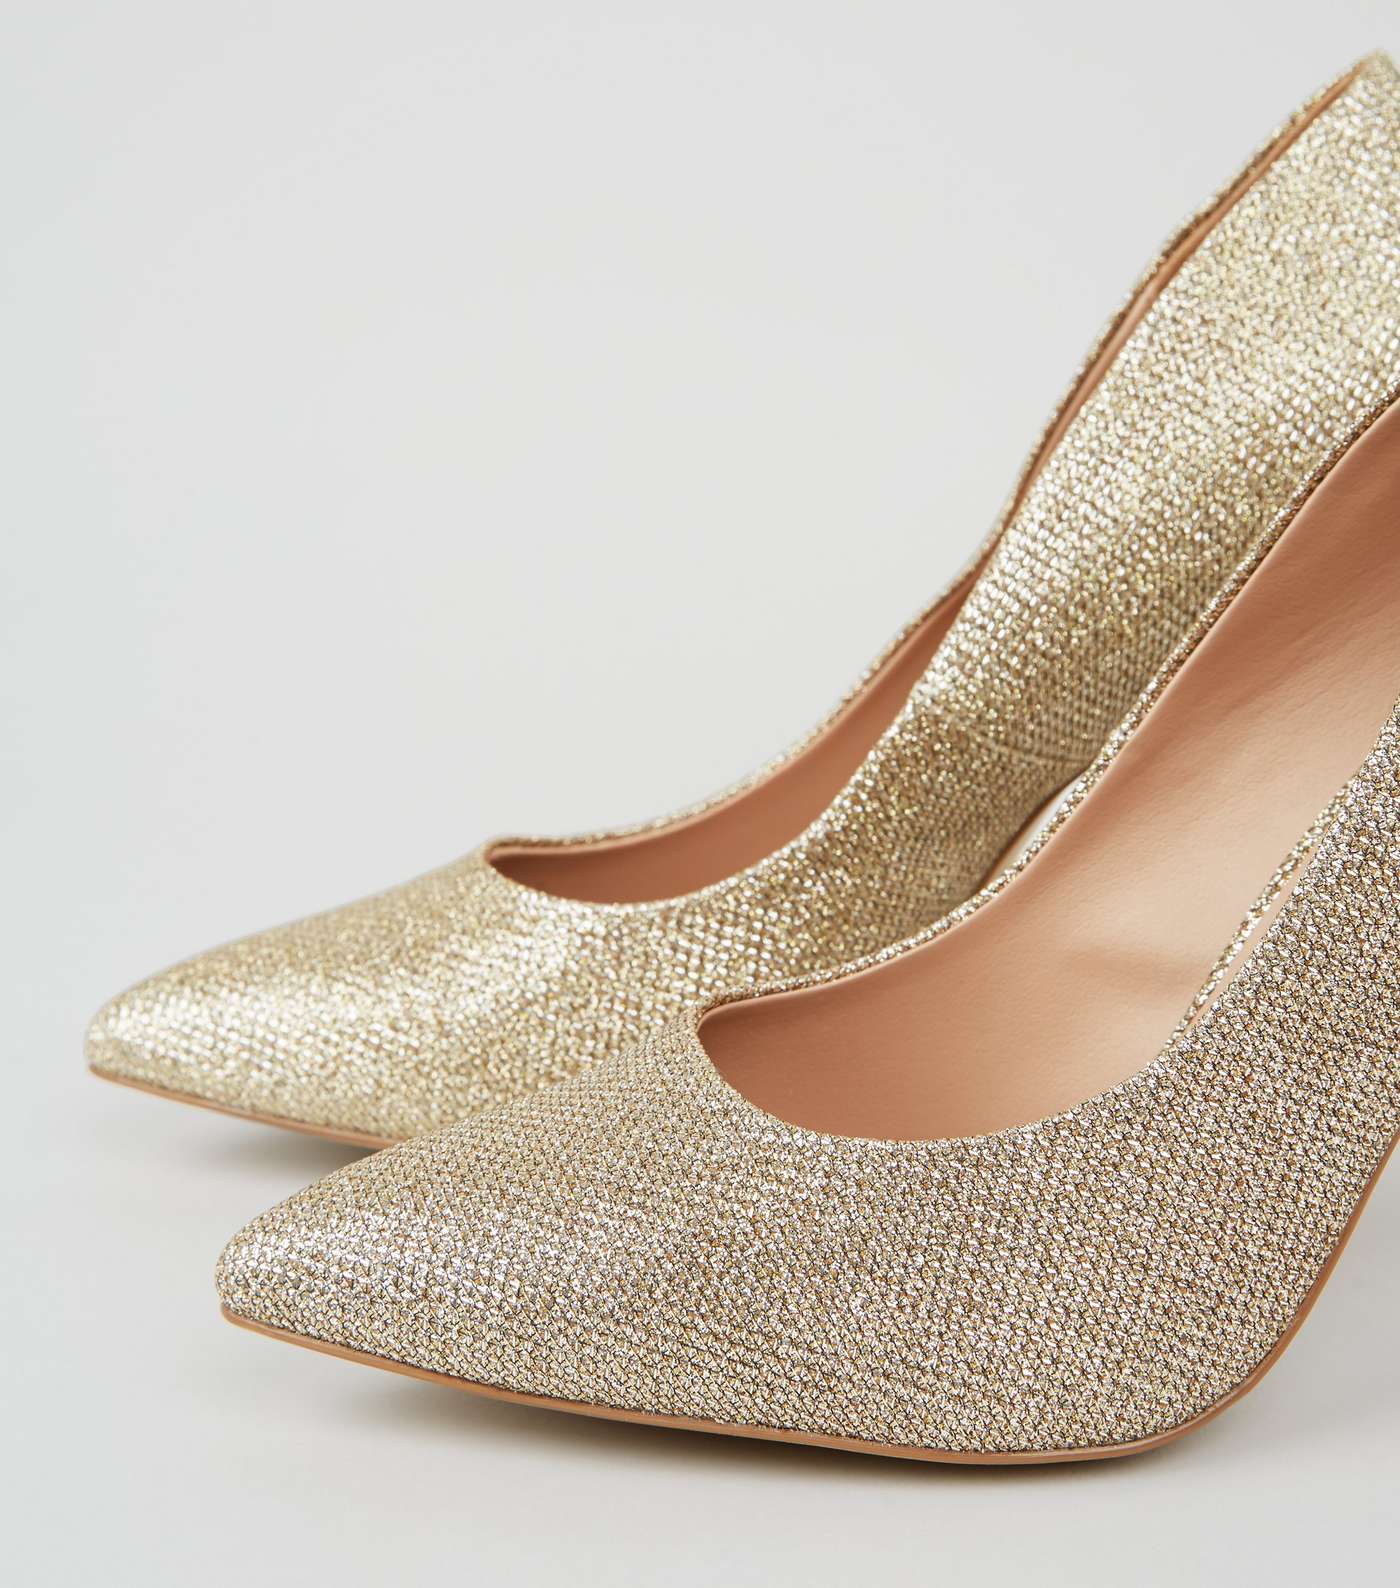 Gold Glitter Stiletto Court Shoes Image 4